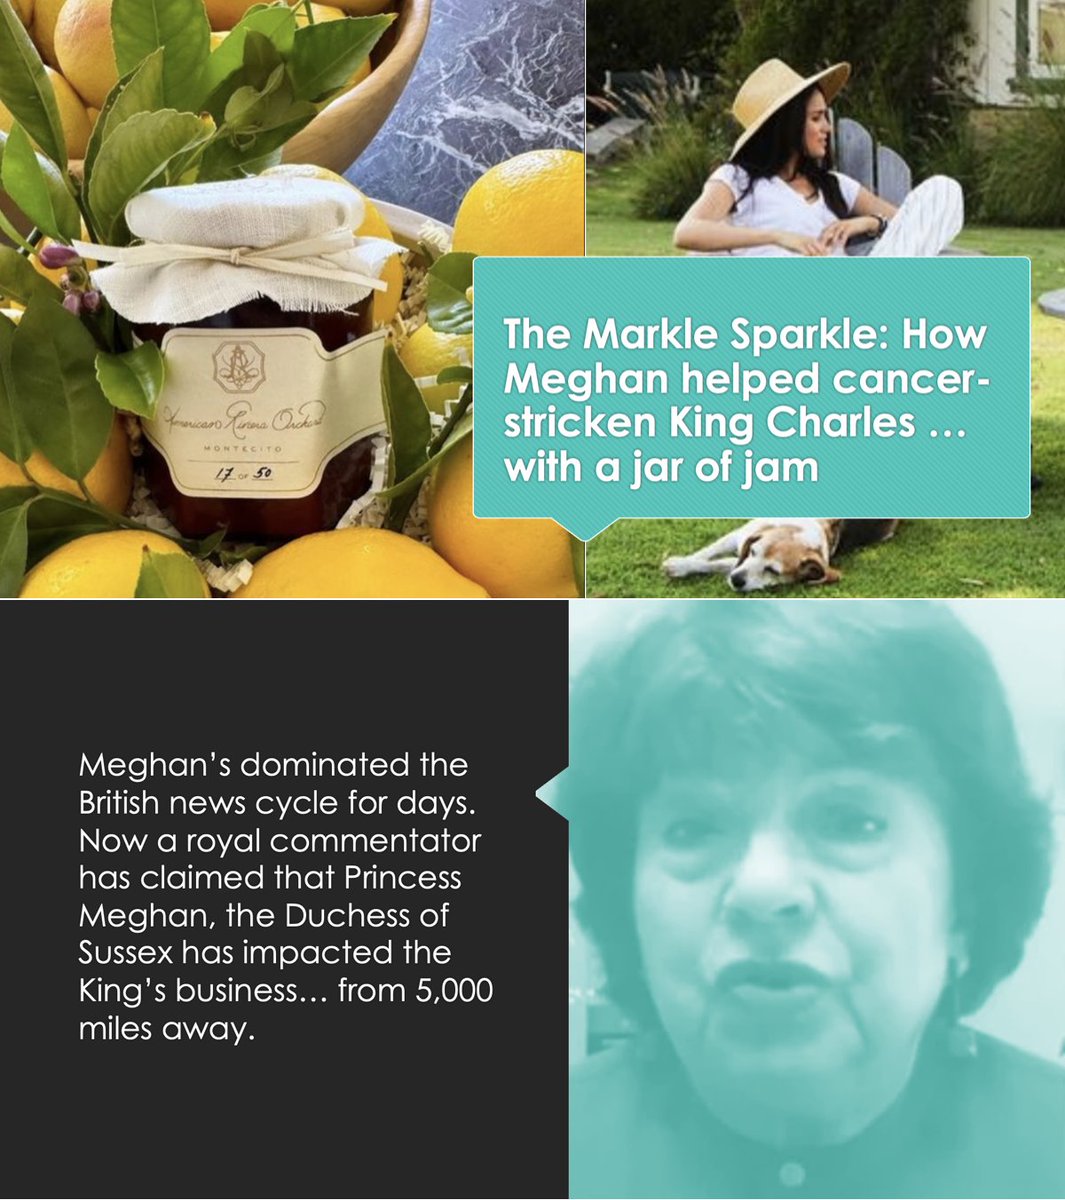 #KingCharles Meghan putting some Markle sparkle on the jam💙💙💙🤣